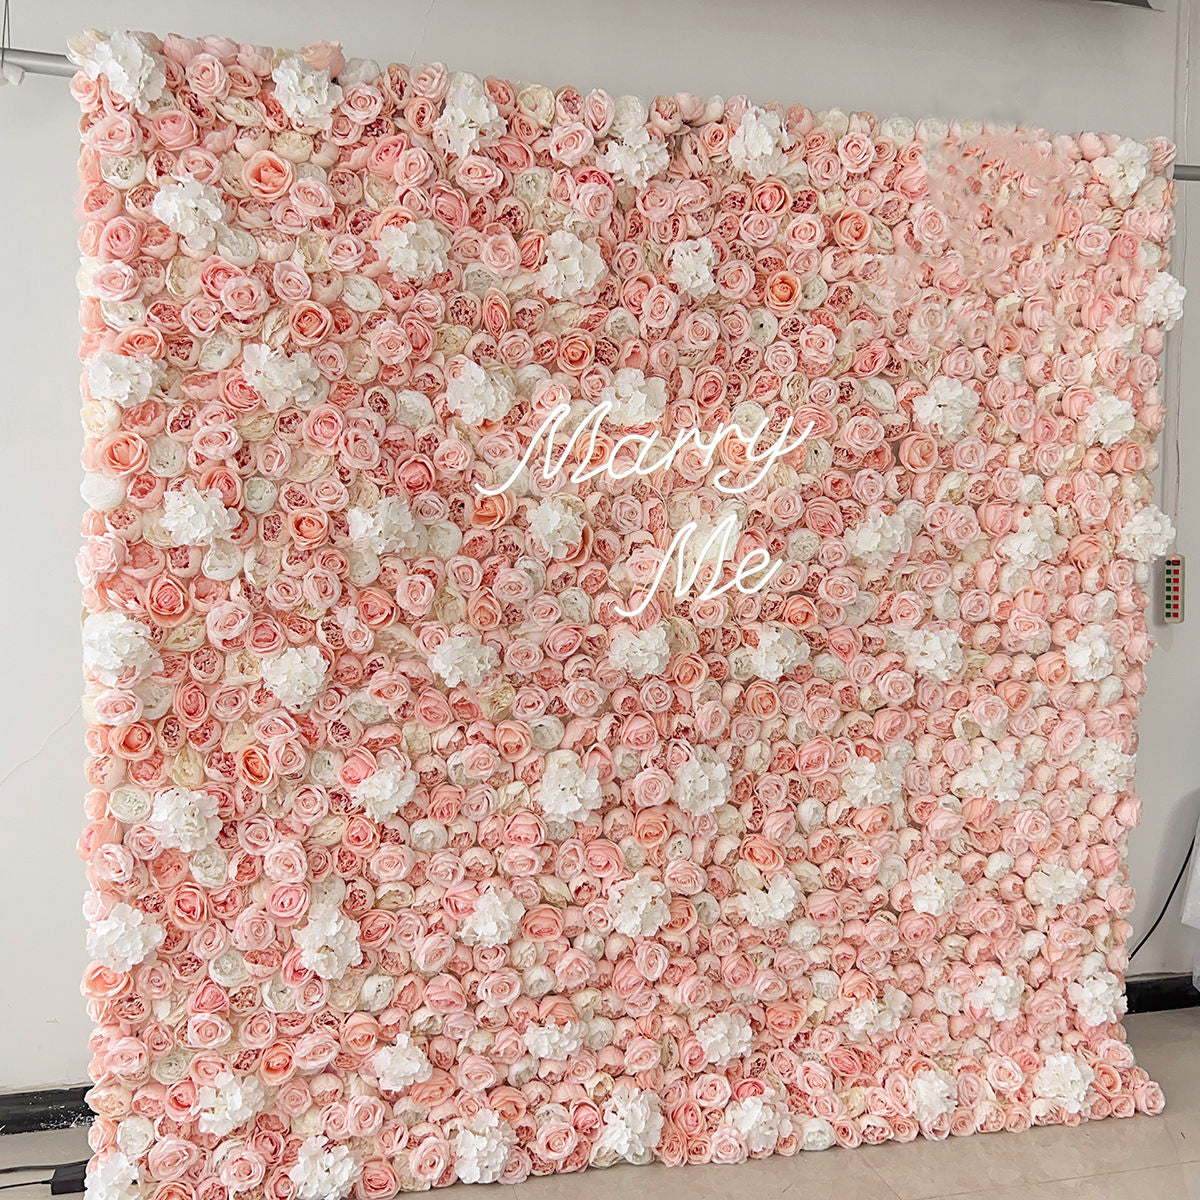 3D Artificial Flower Wall Arrangement Wedding Party Birthday Backdrop Decor HQ3768